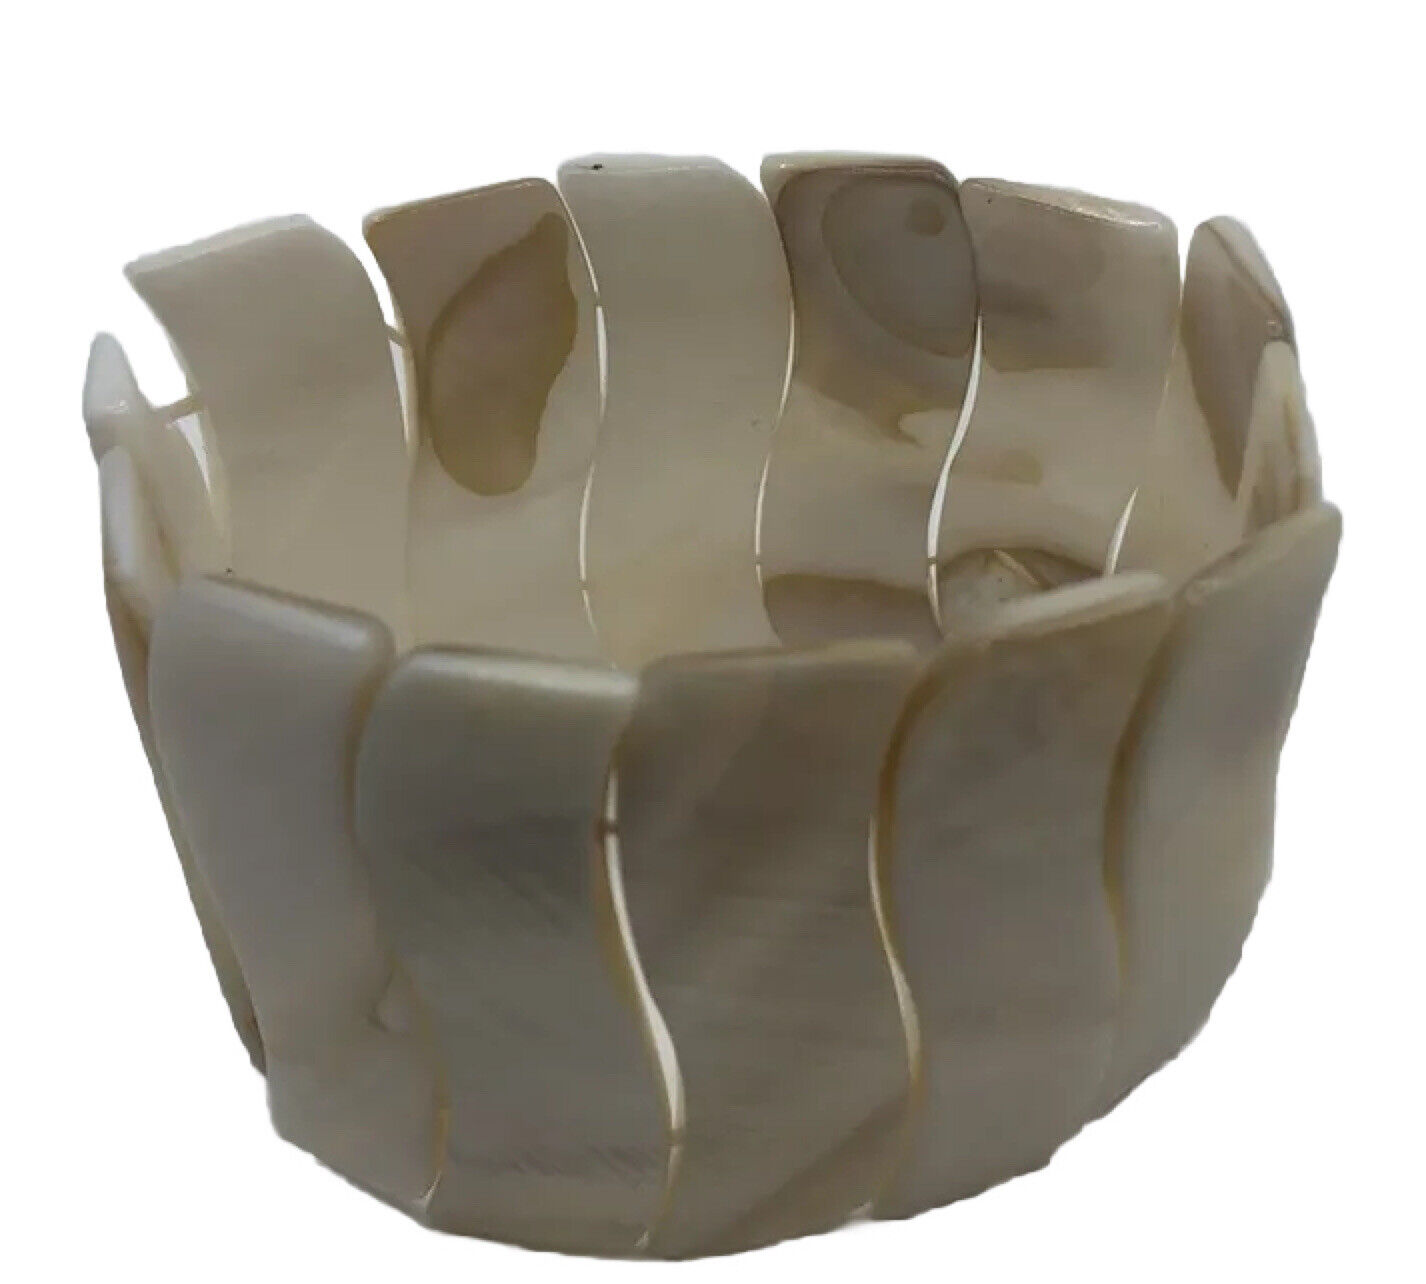 Shell Expandable Ivory color Bracelet - image 7